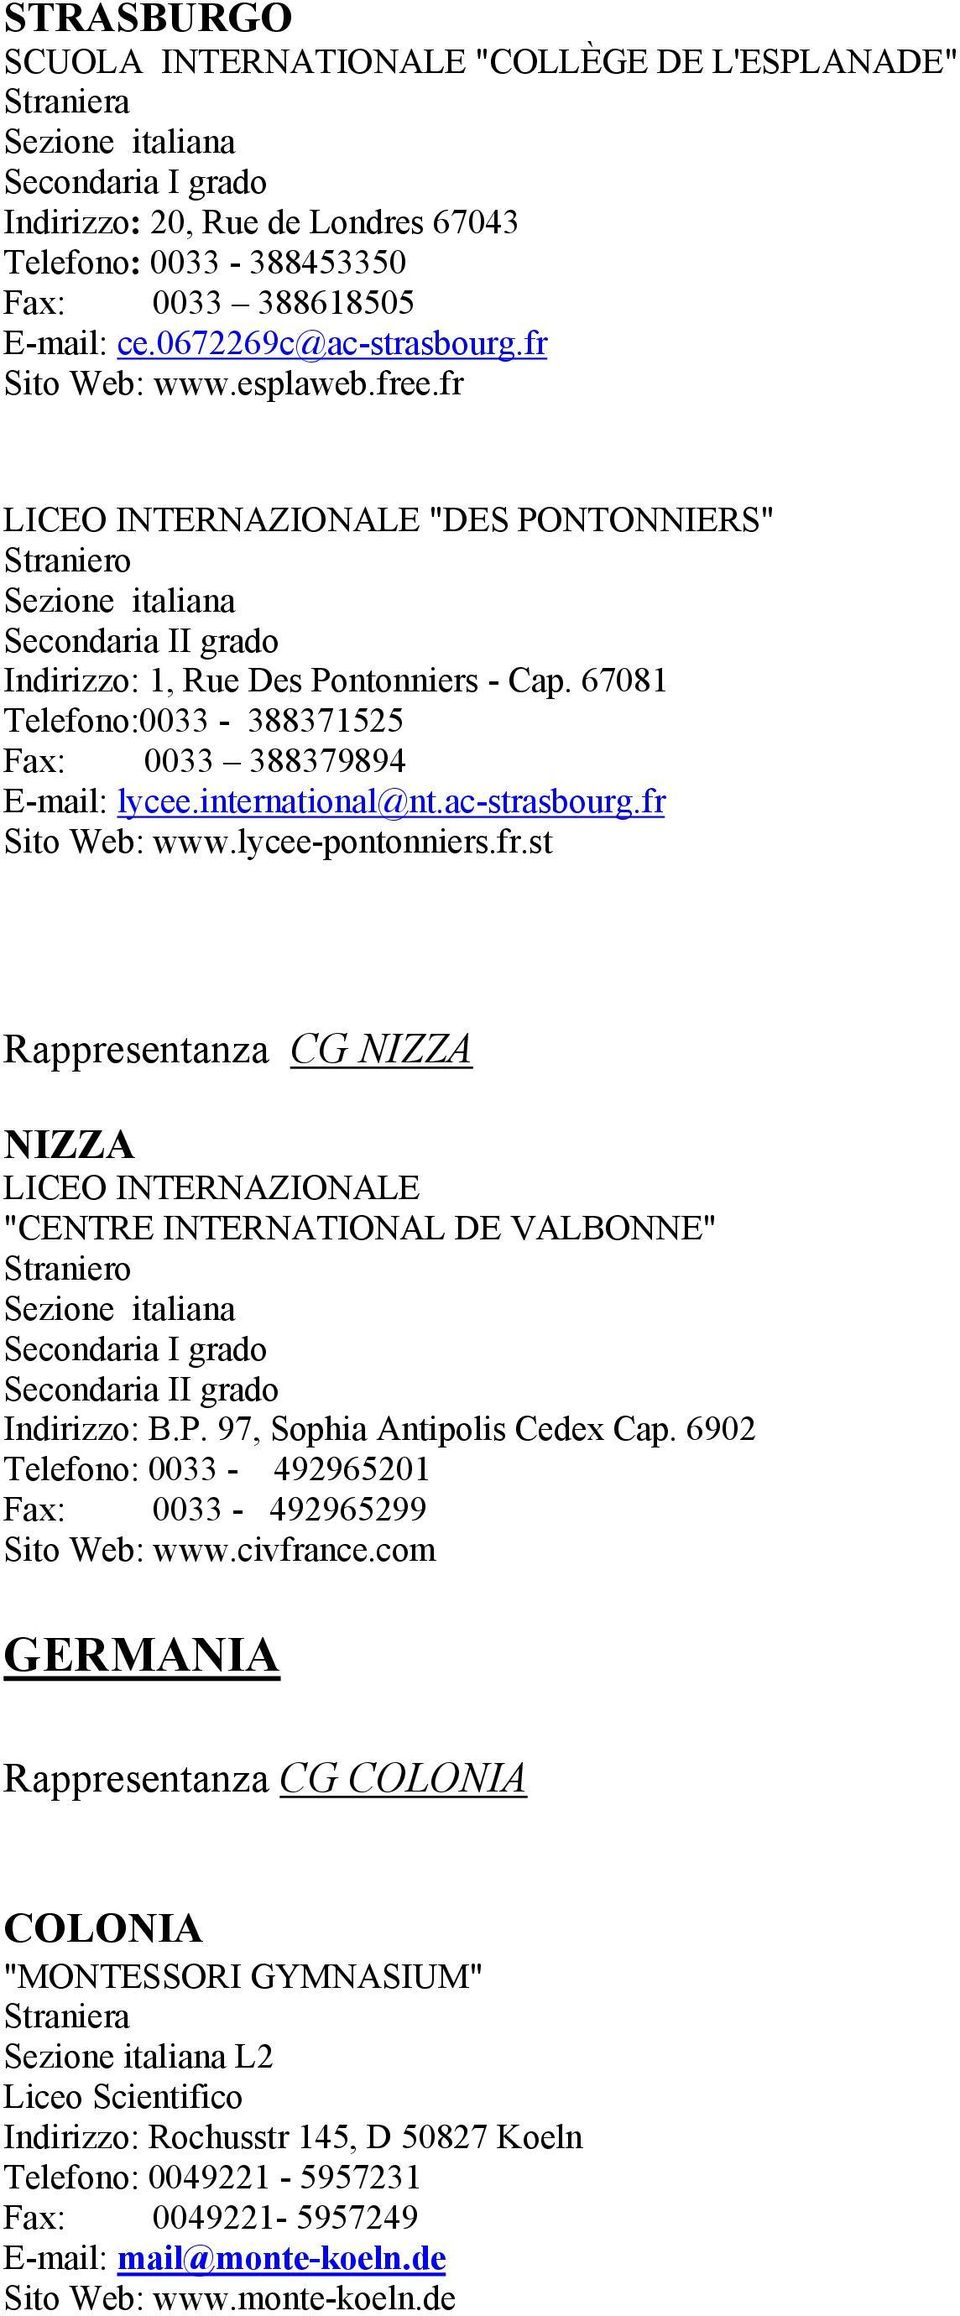 lycee-pontonniers.fr.st Rappresentanza CG NIZZA NIZZA LICEO INTERNAZIONALE "CENTRE INTERNATIONAL DE VALBONNE" Indirizzo: B.P. 97, Sophia Antipolis Cedex Cap.